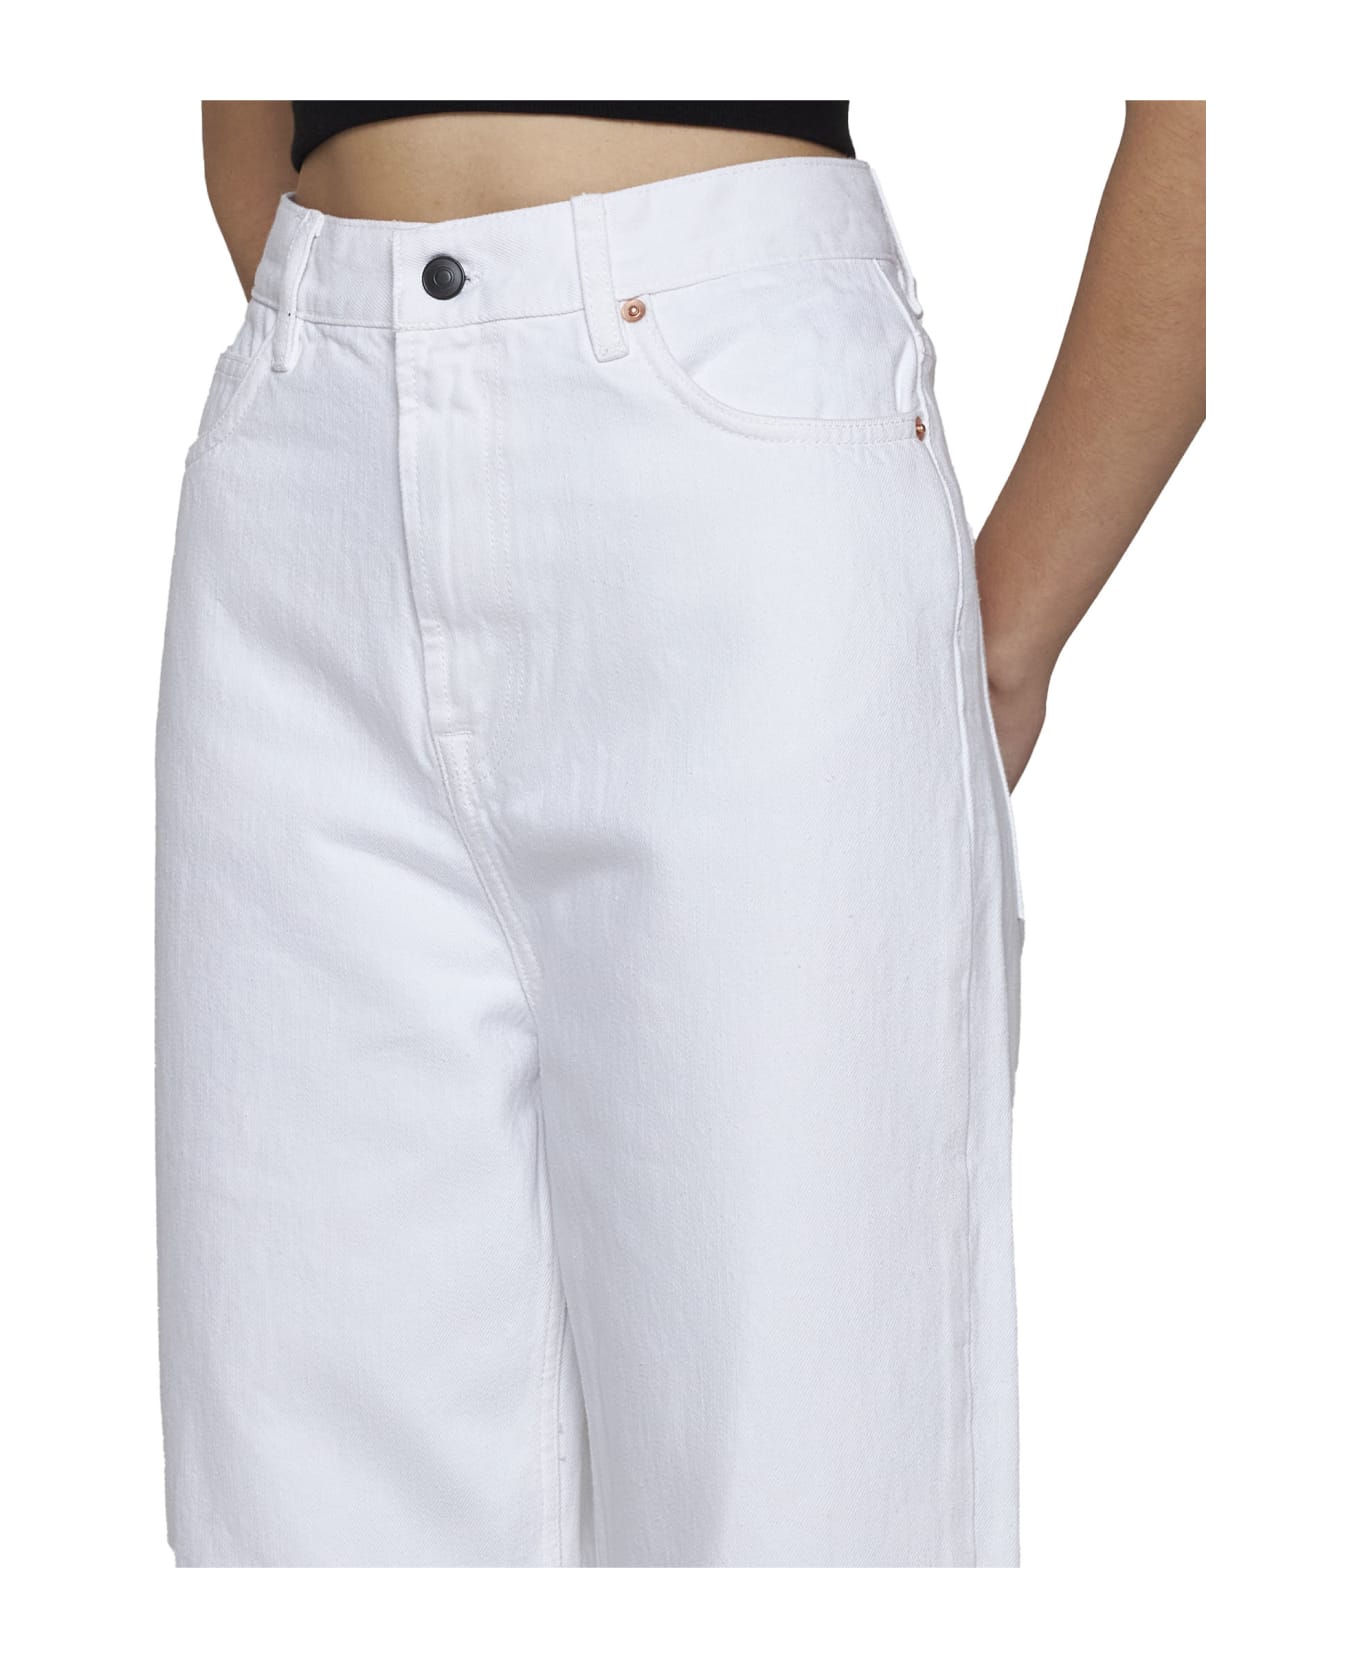 WARDROBE.NYC Jeans - White デニム